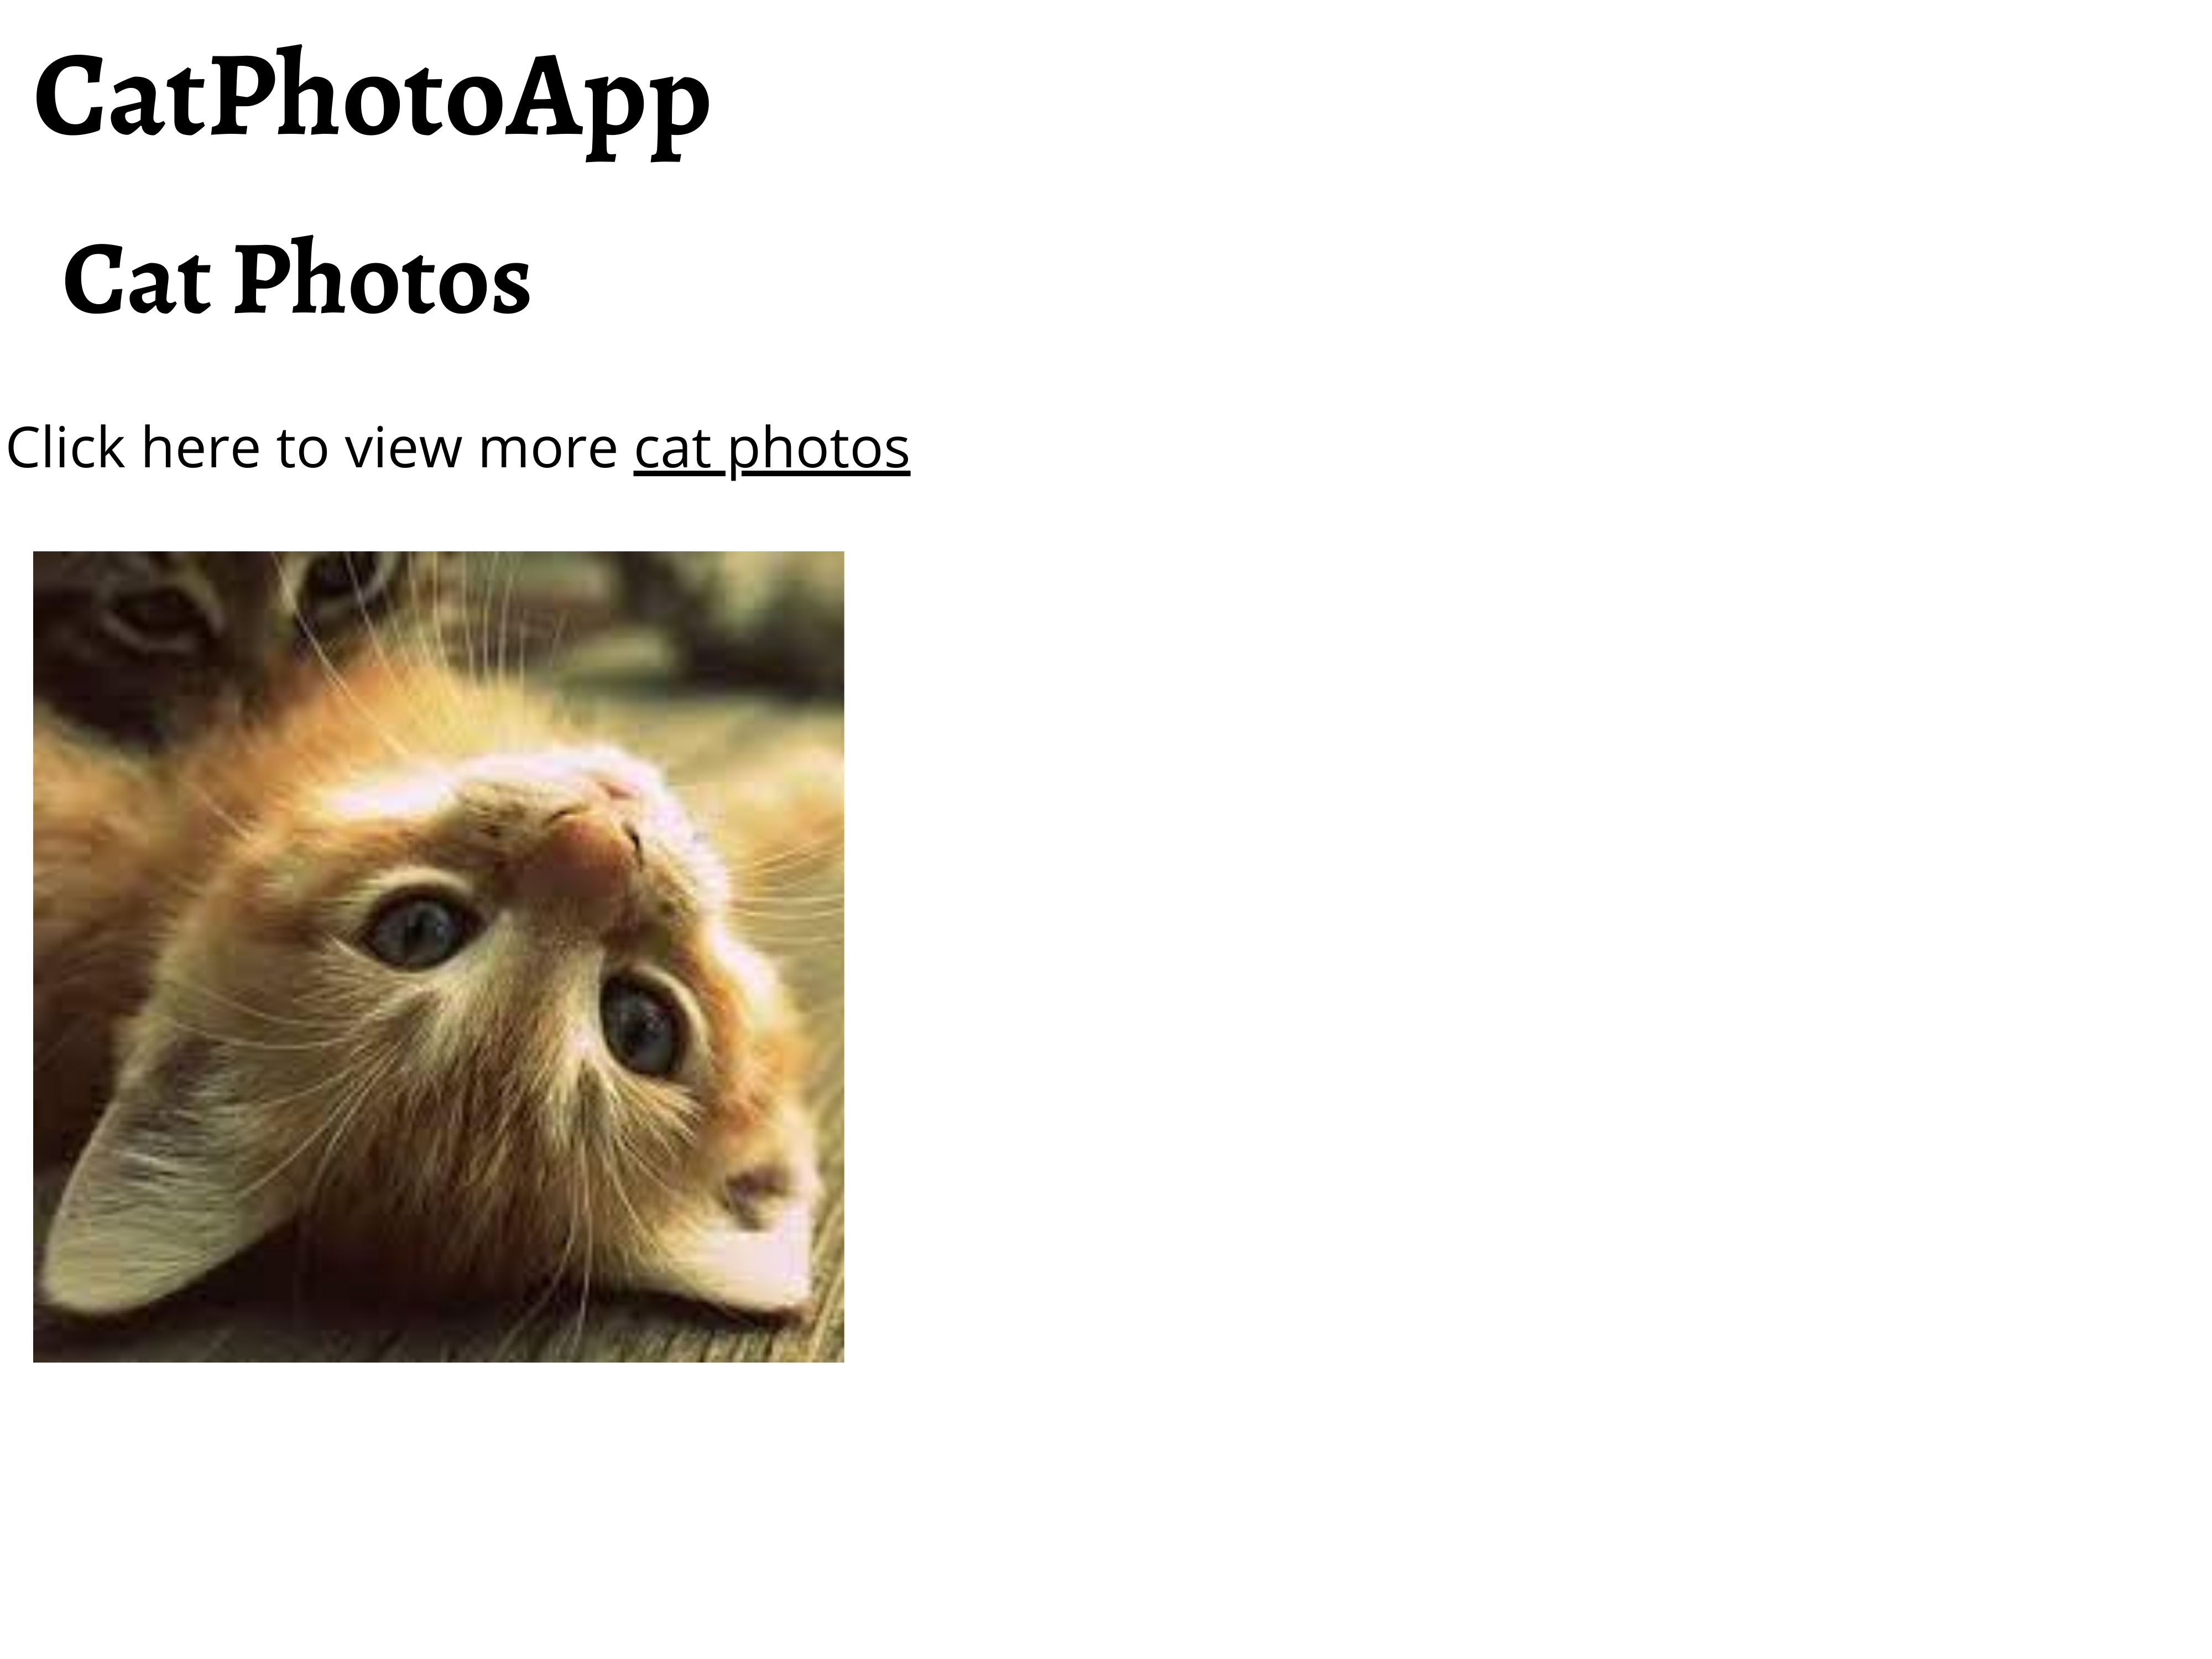 Cat Photo App (1).png